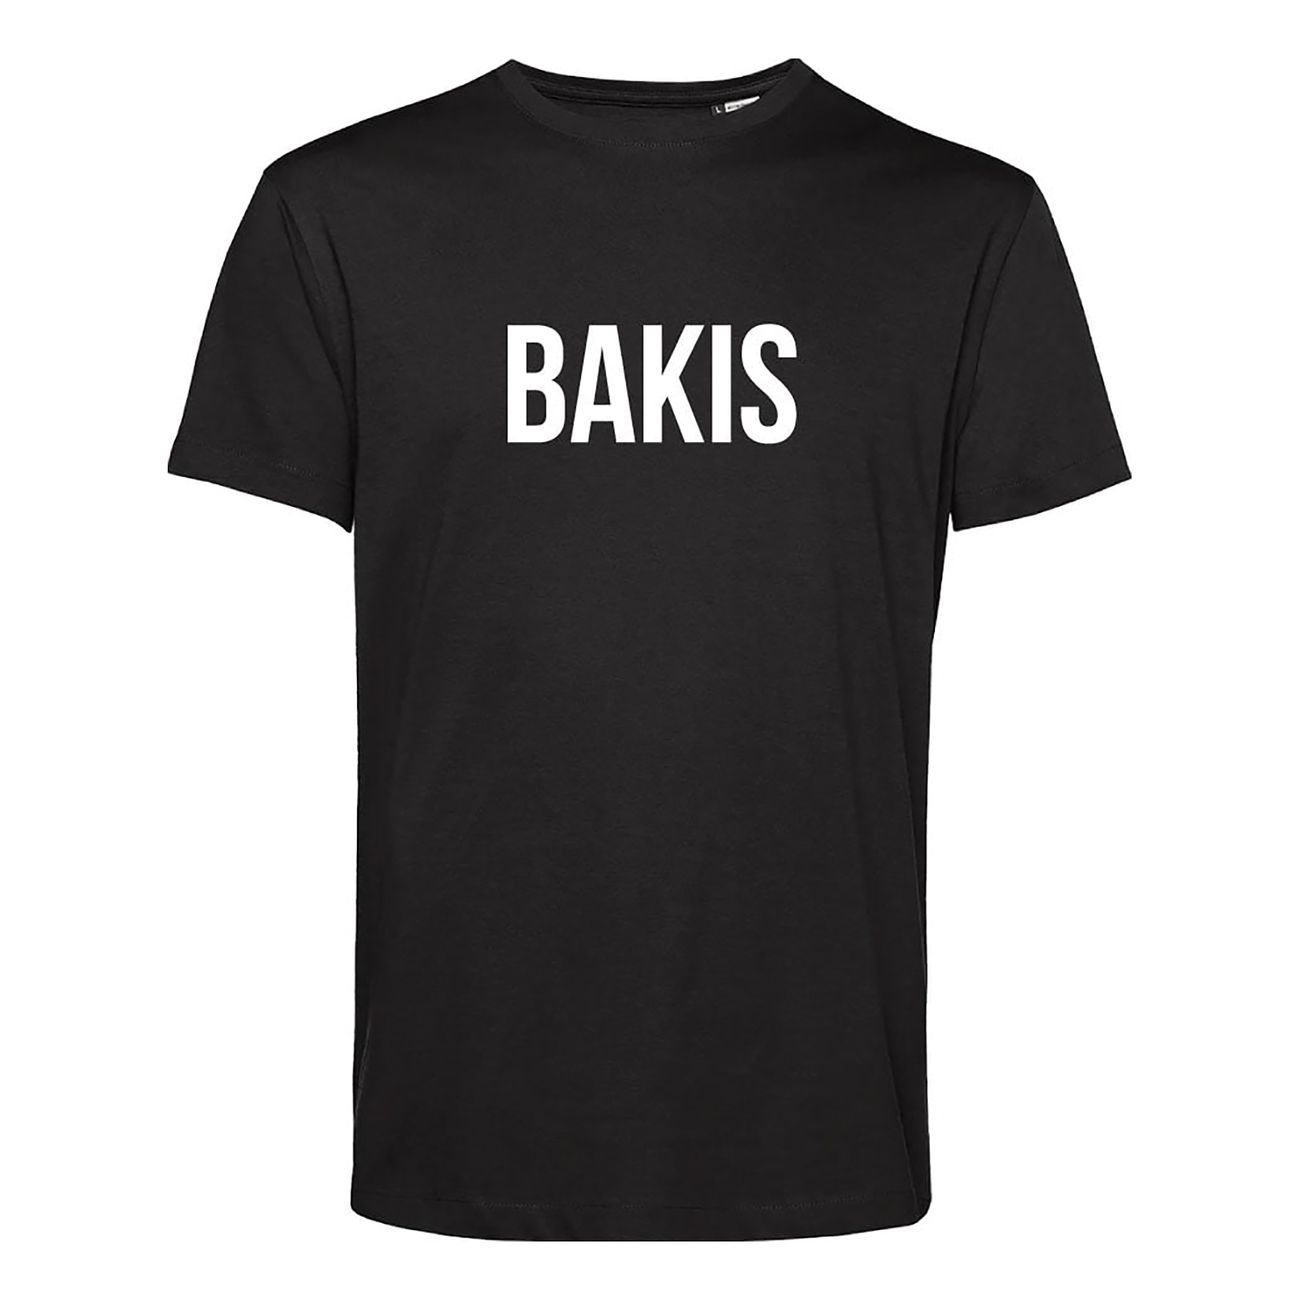 bakis-t-shirt-100930-1